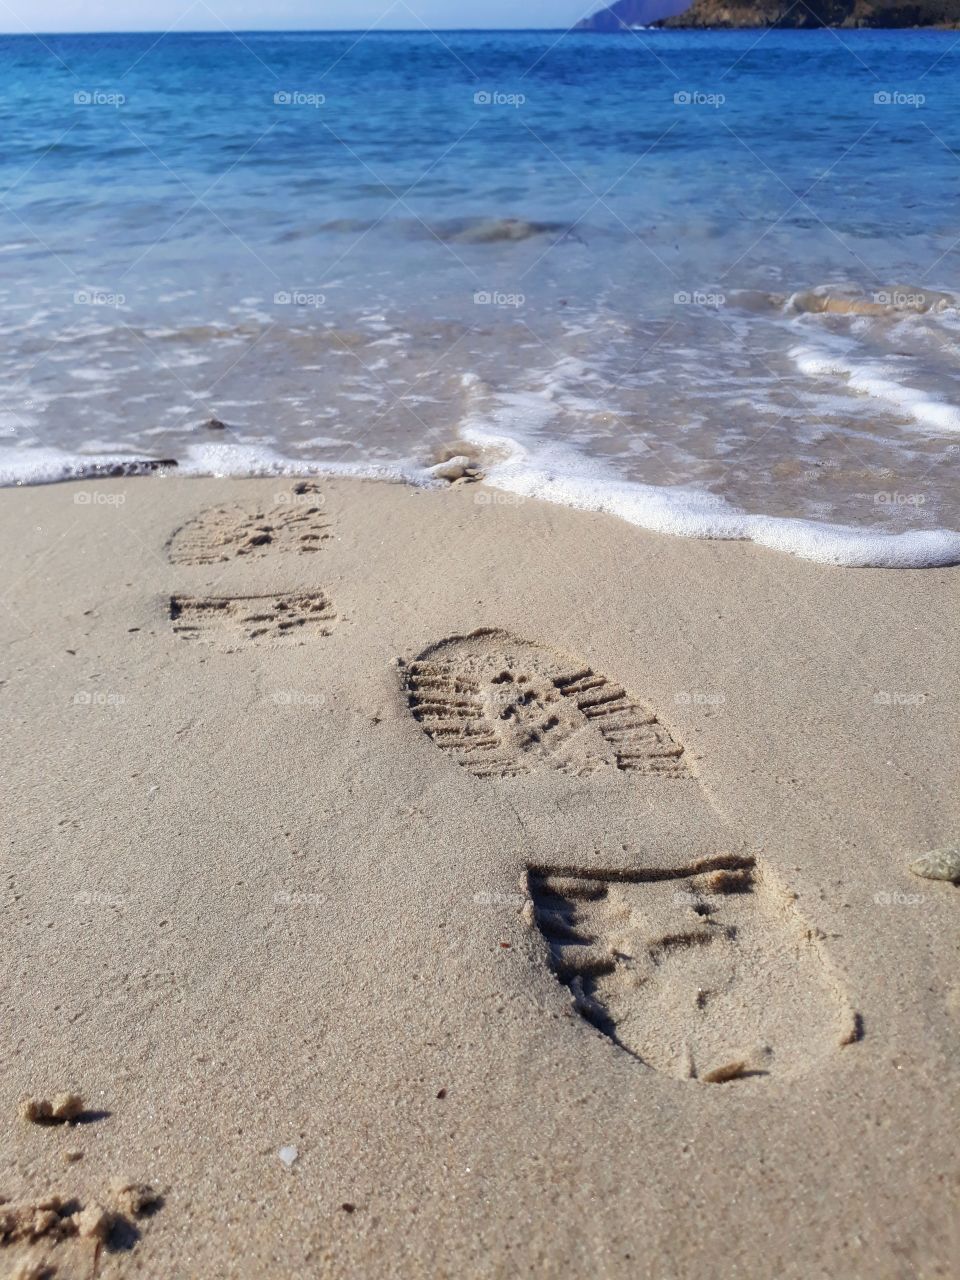 footprint of military boot in the seashore